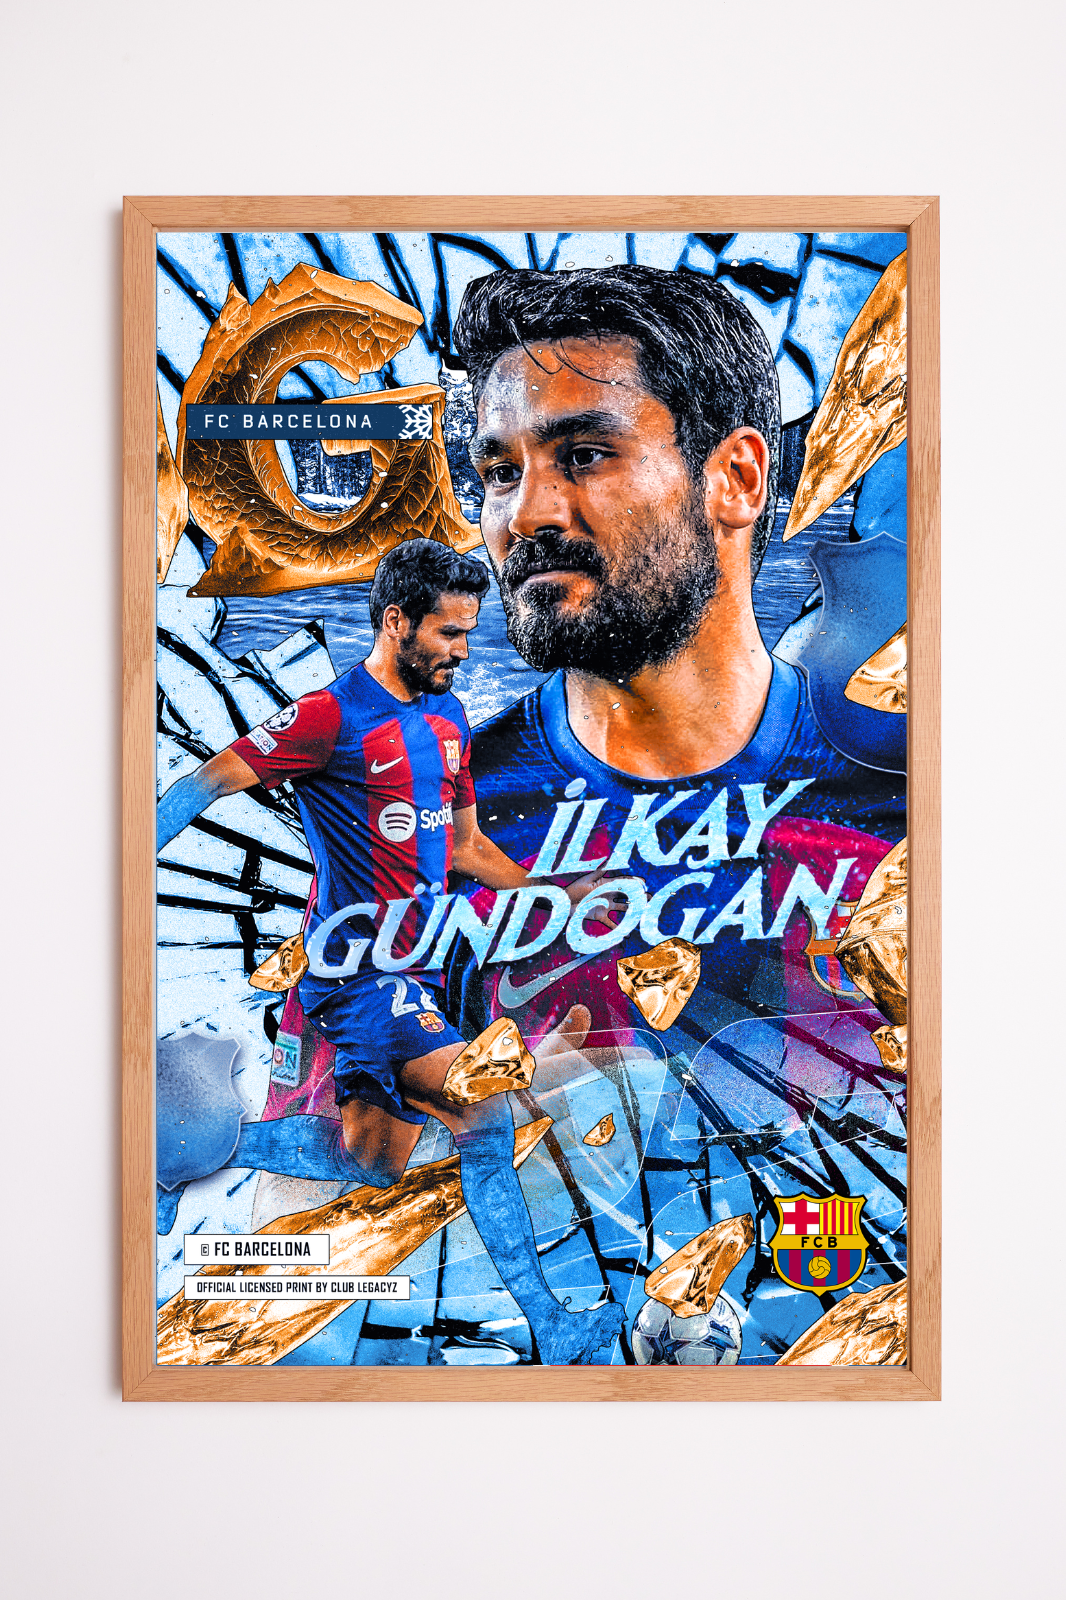 FC Barcelona - İlkay Gündogan Frozen poster limited to 100